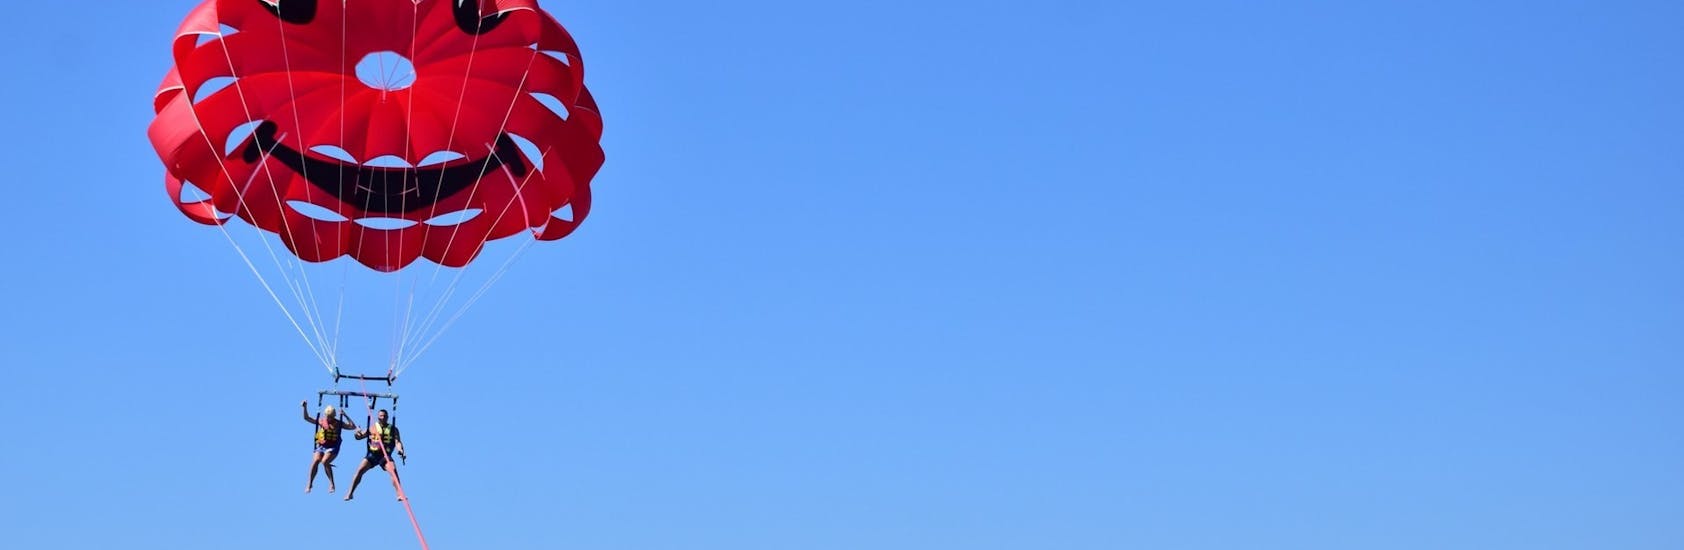 Immagine di persone in aria durante l'attività di parasailing con St. Nicholas Beach Watersports Zakynthos.